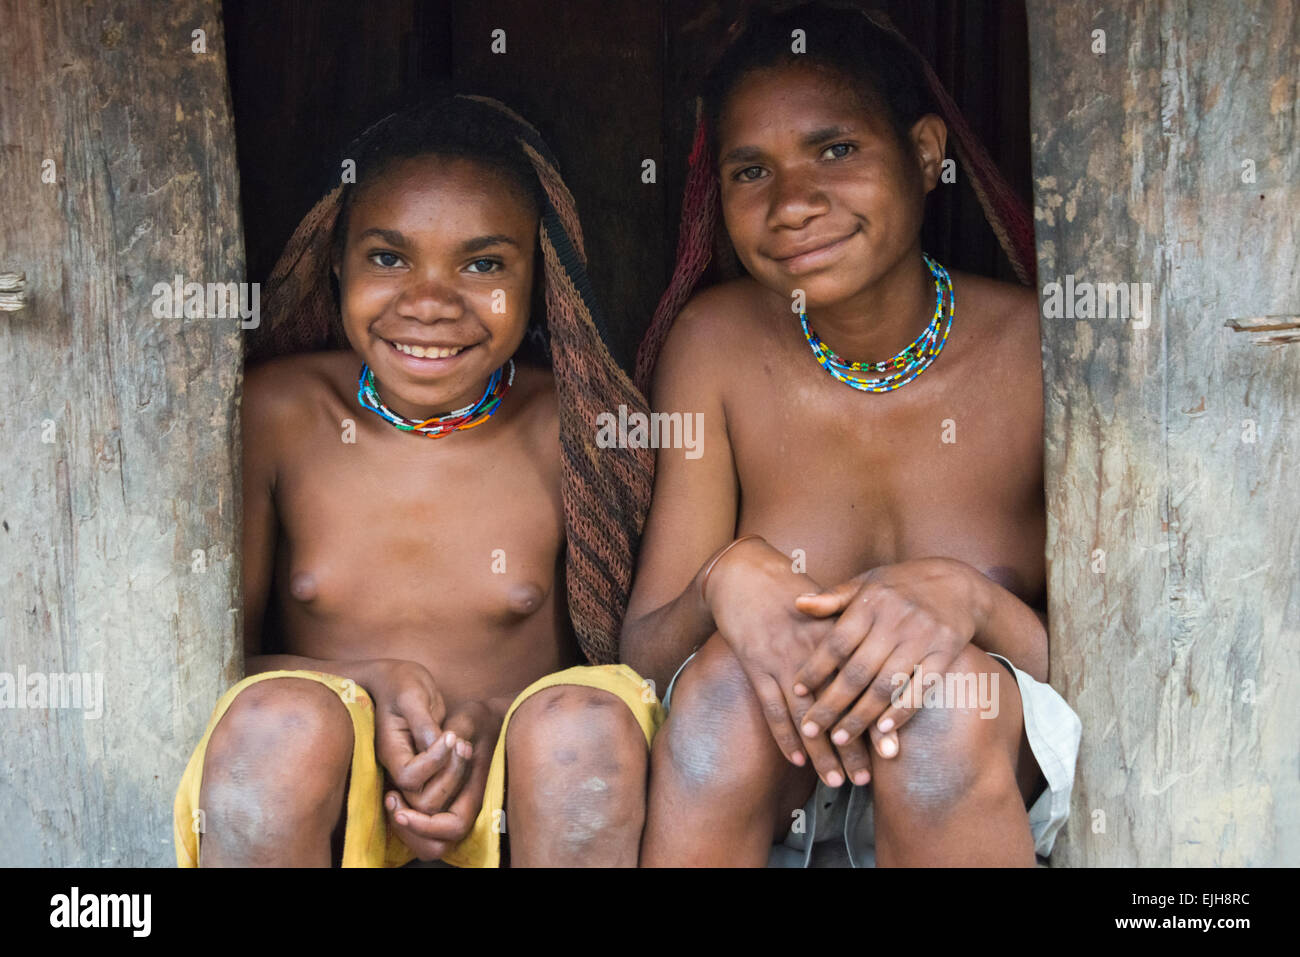 Dani girls in the village, Wamena, Papua, Indonesia Stock Photo